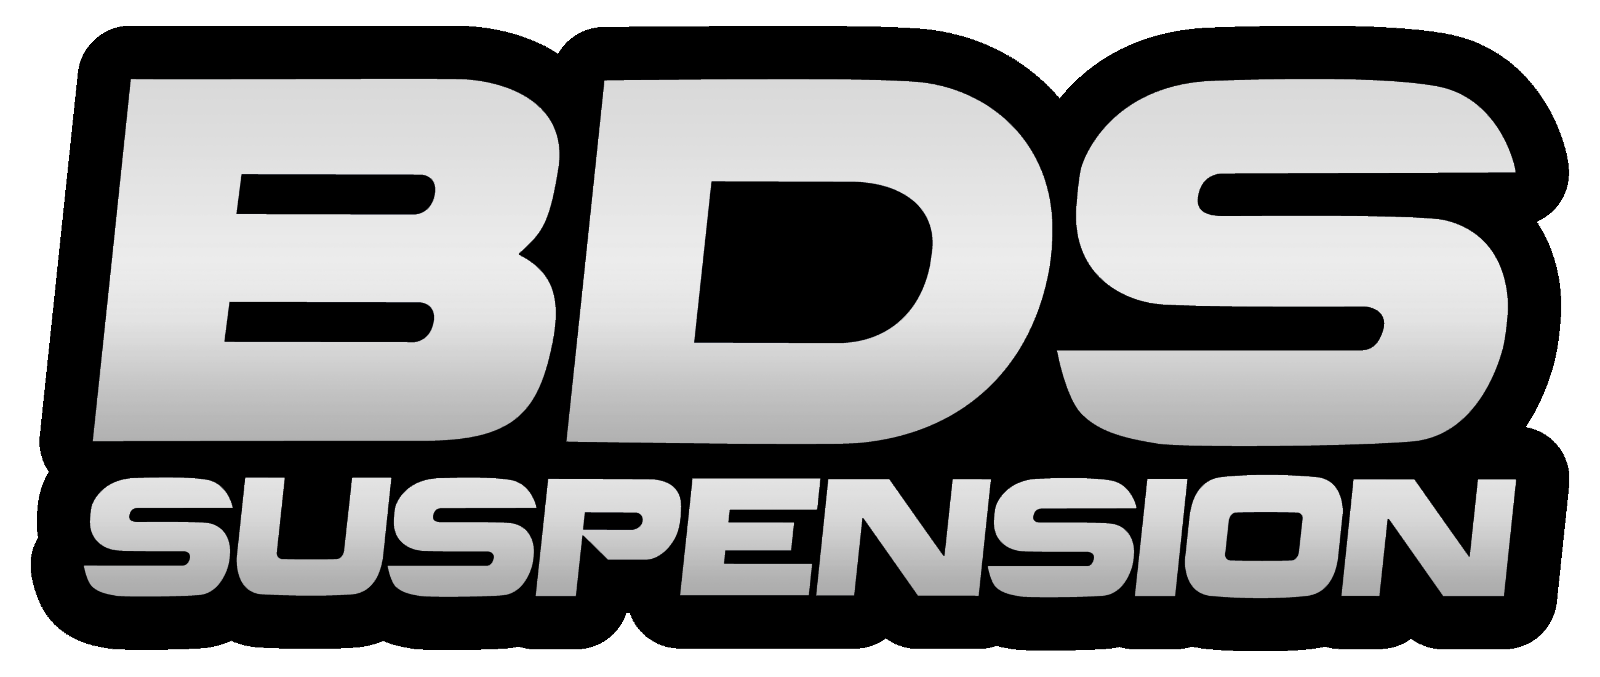 BDS BDS1801FSR 6 Inch Lift Kit - Chevy Silverado or GMC Sierra 1500 (19-24) 4WD - Gas